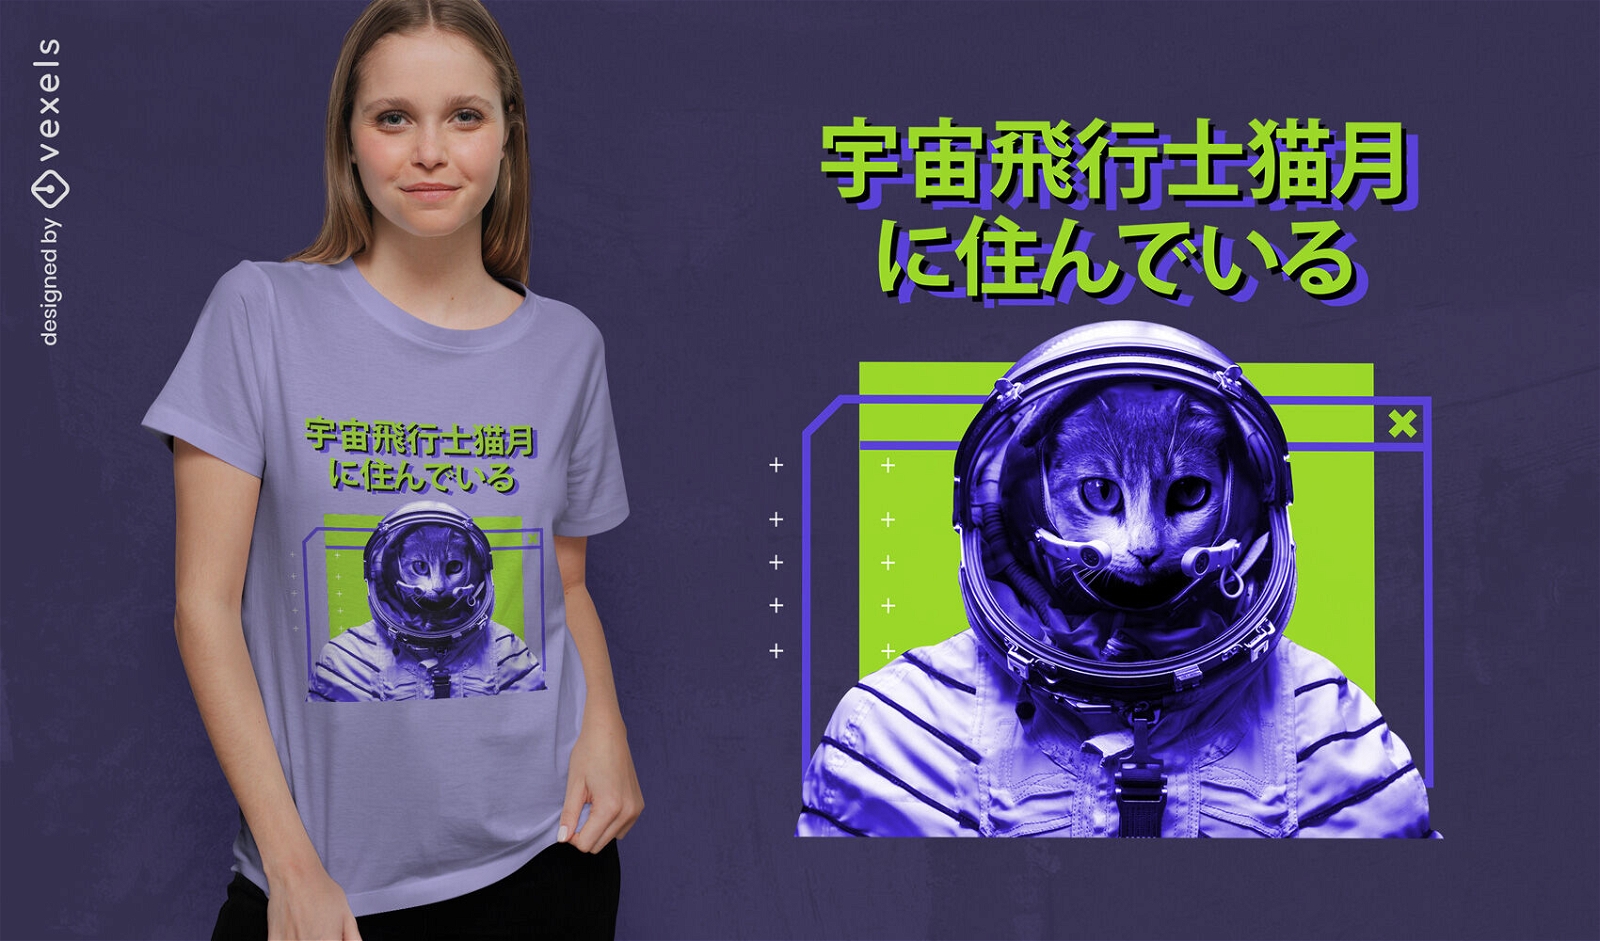 Weltraumastronautenkatzentier-T-Shirt psd